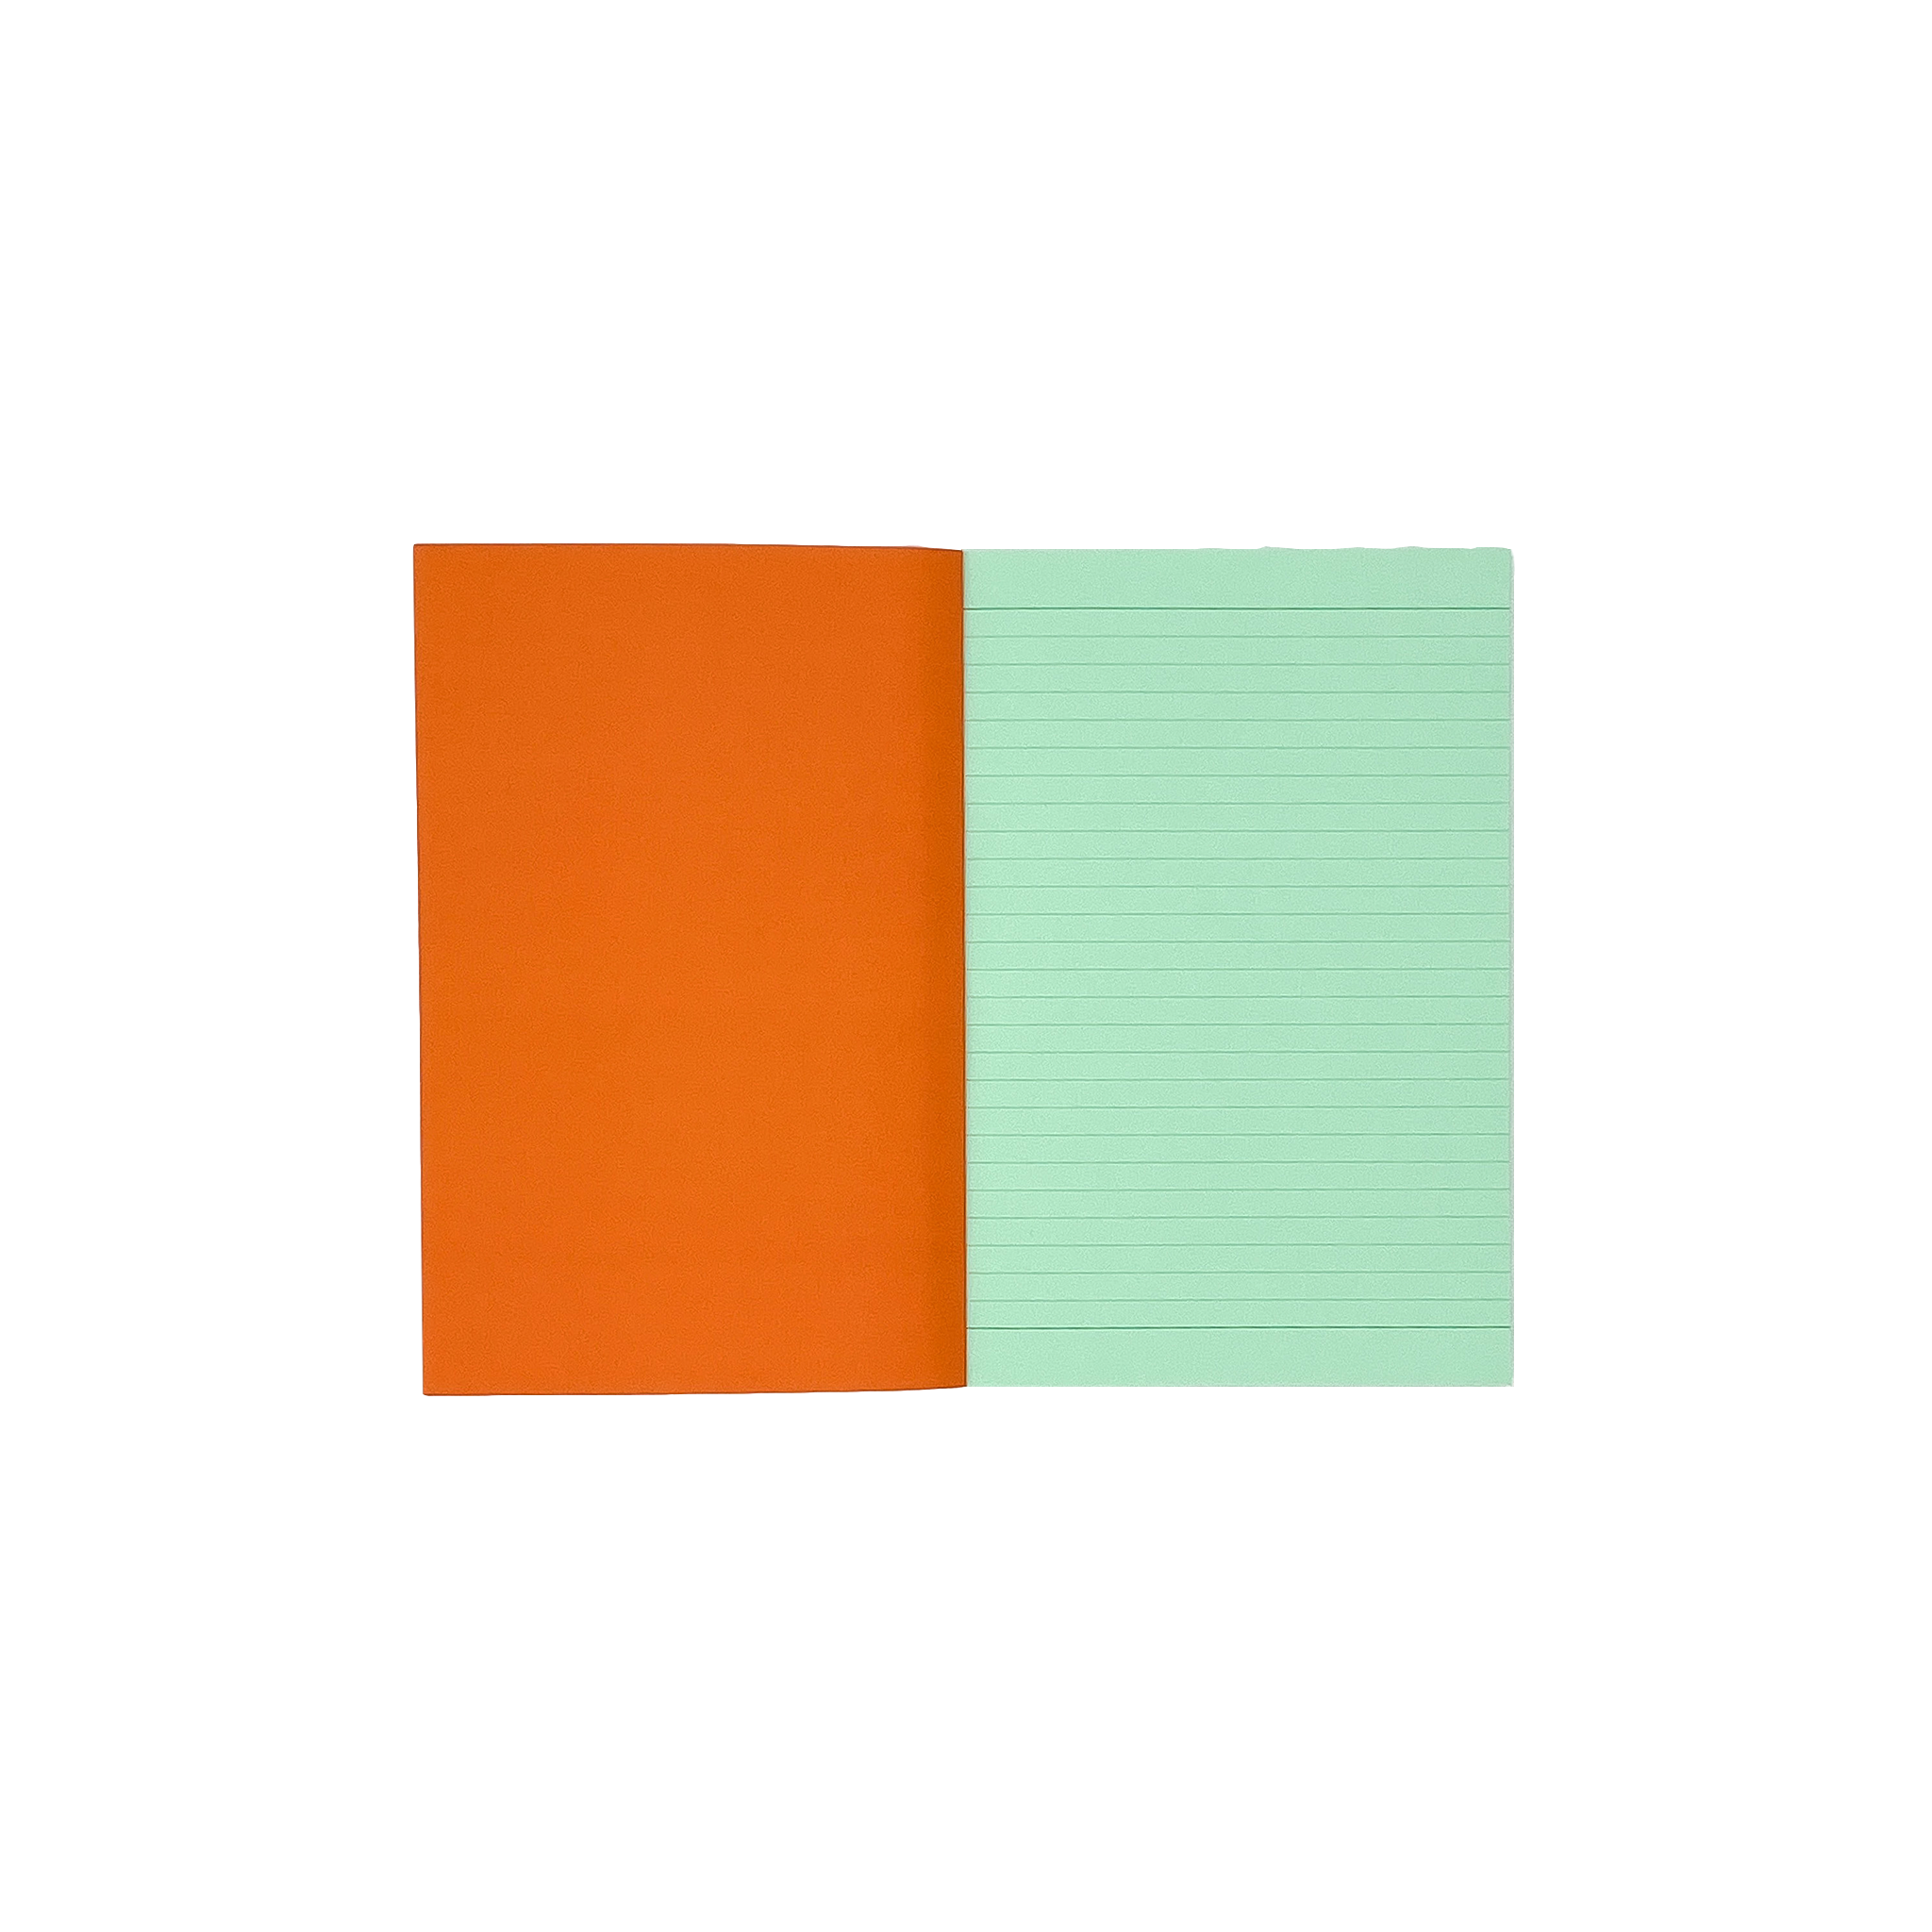 Final Edit Otto Bound A5 Green Notebook